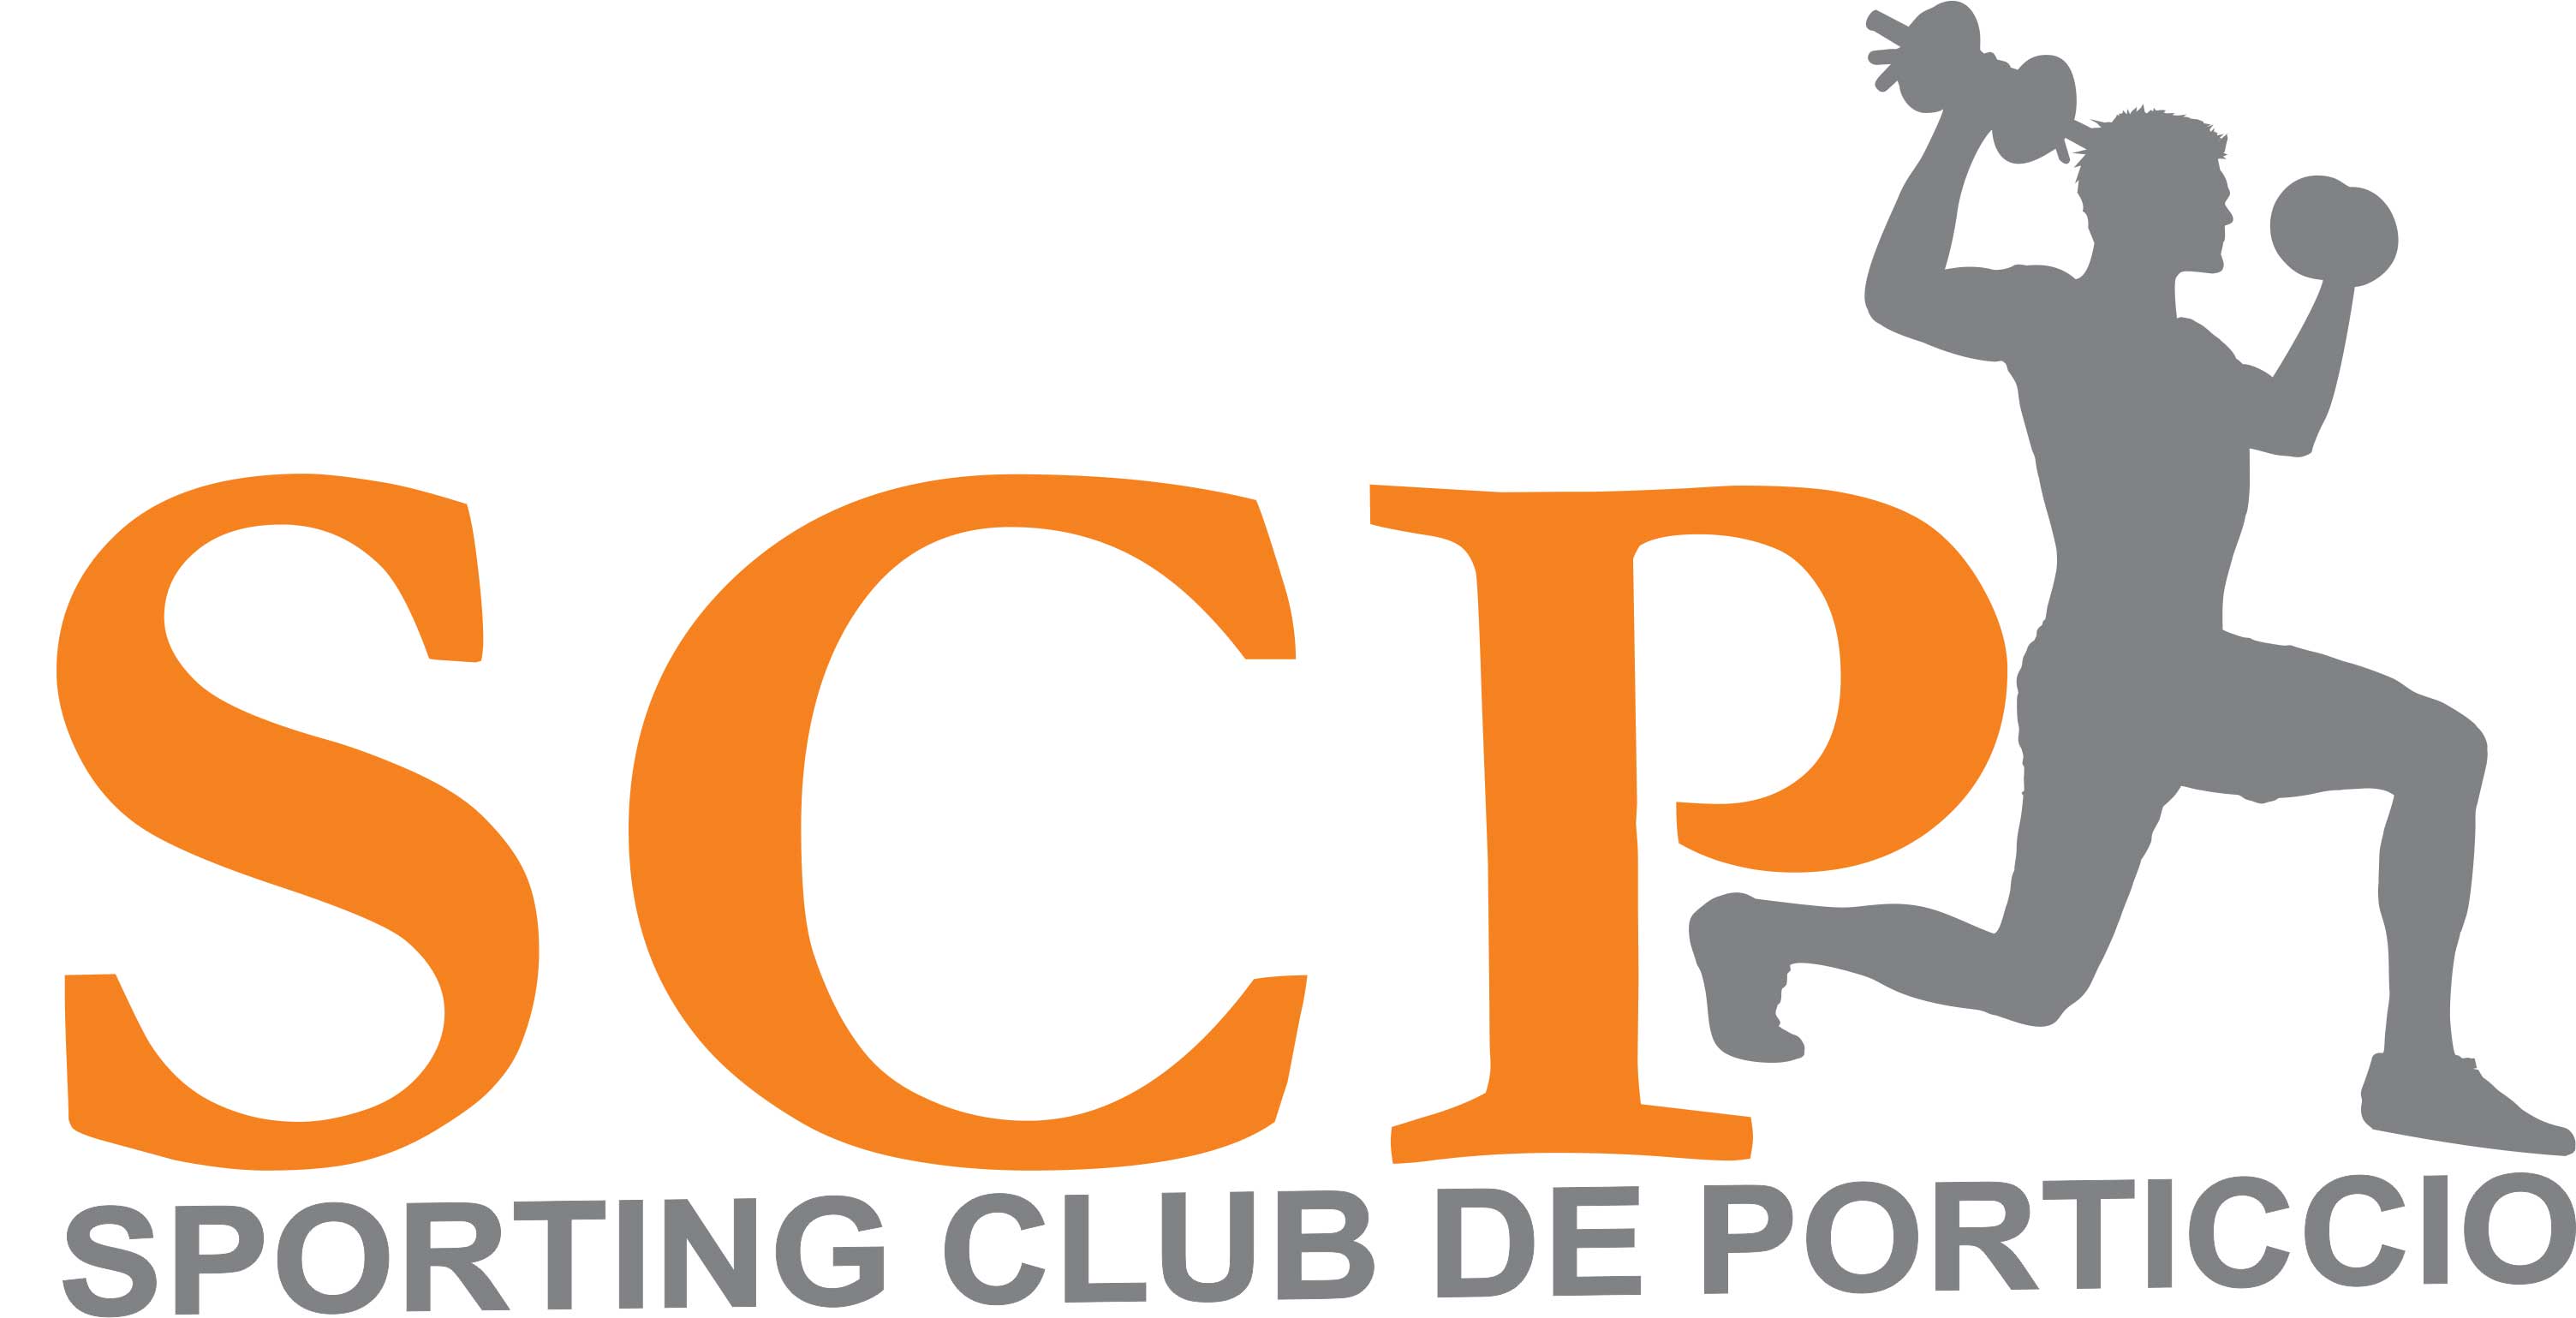 SPORTING CLUB DE PORTICCIO